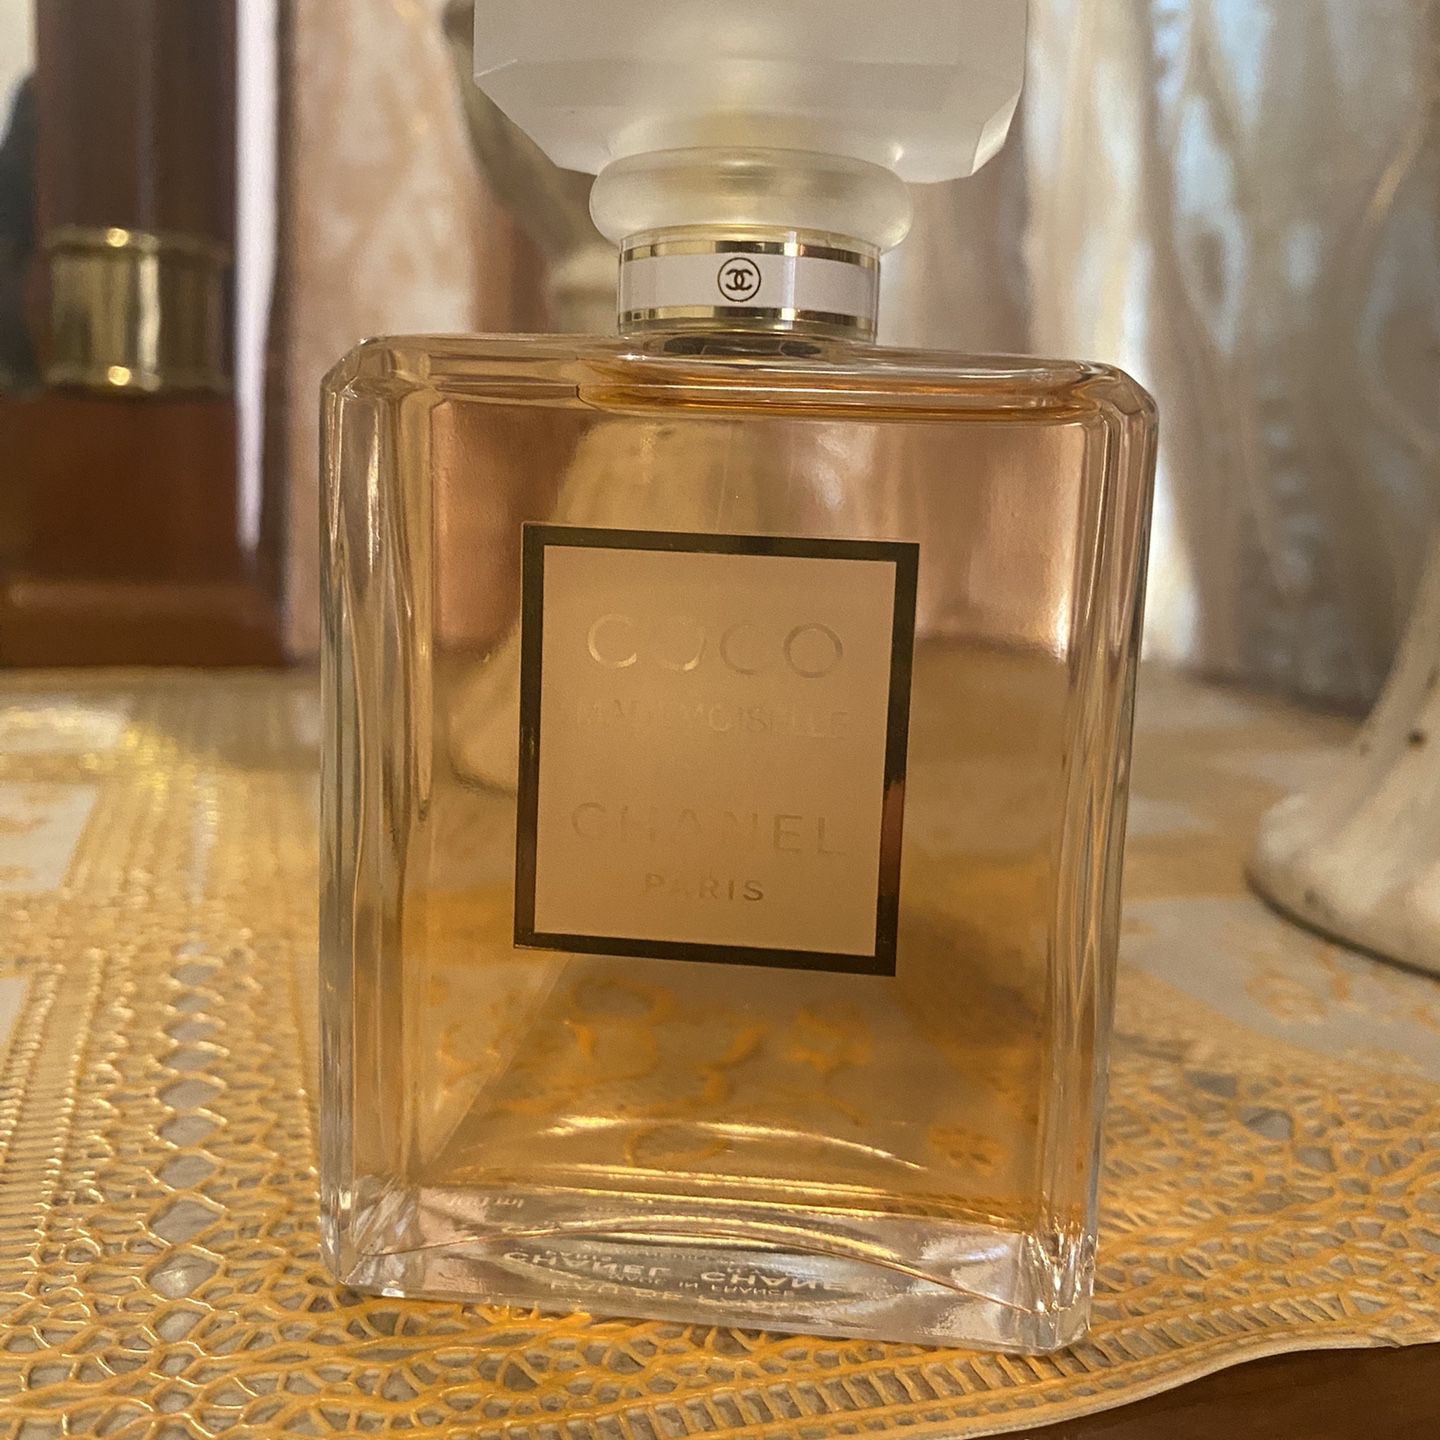 COCO CHANEL MADEMOISELLE 3.4 fl oz Eau De Parfum Spray for Women NEW IN BOX  $72.99 - PicClick